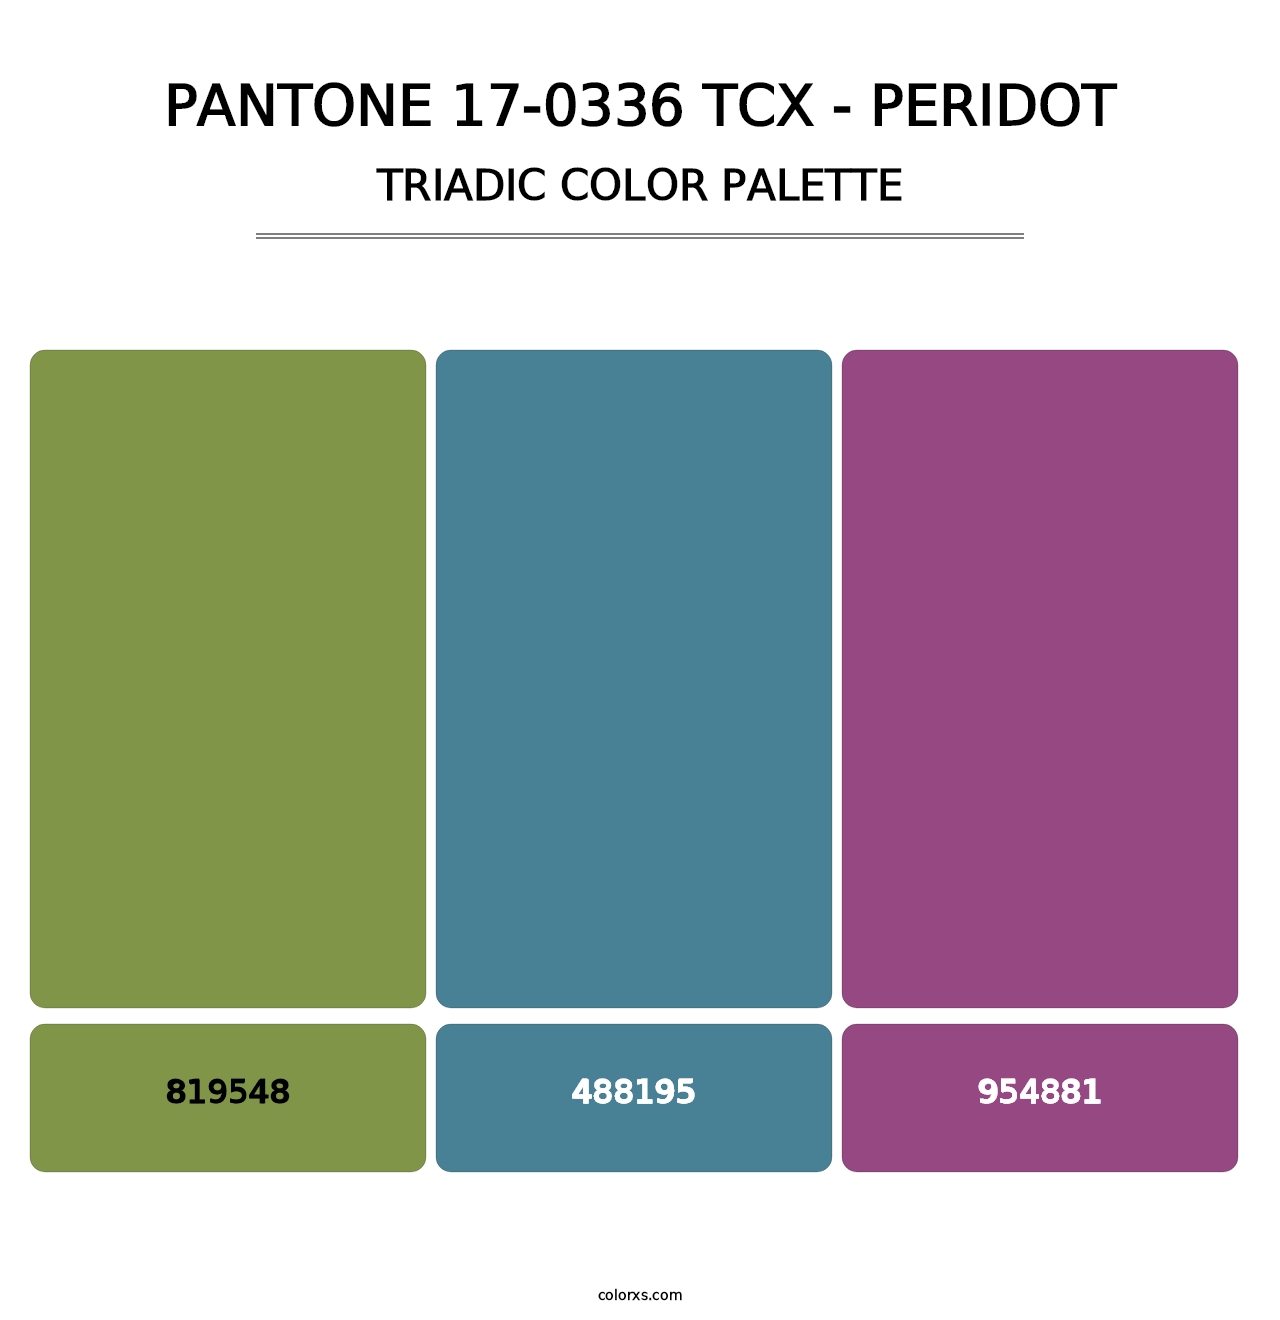 PANTONE 17-0336 TCX - Peridot - Triadic Color Palette